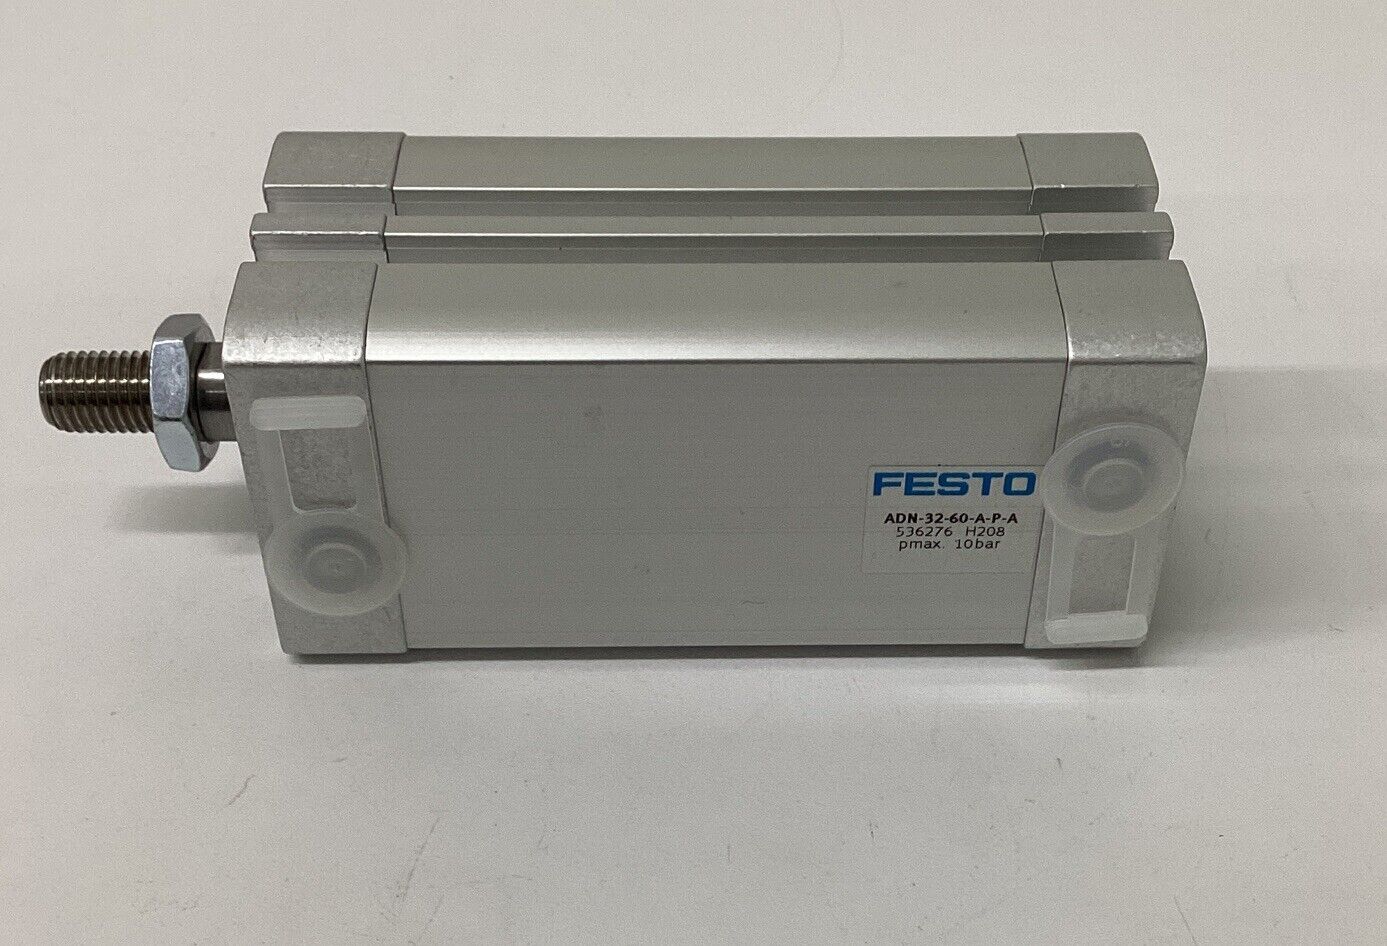 Festo ADN-32-60-A-P-A / 536276 Compact Cylinder 32mm Piston x 60mm Stroke BL291 - 0